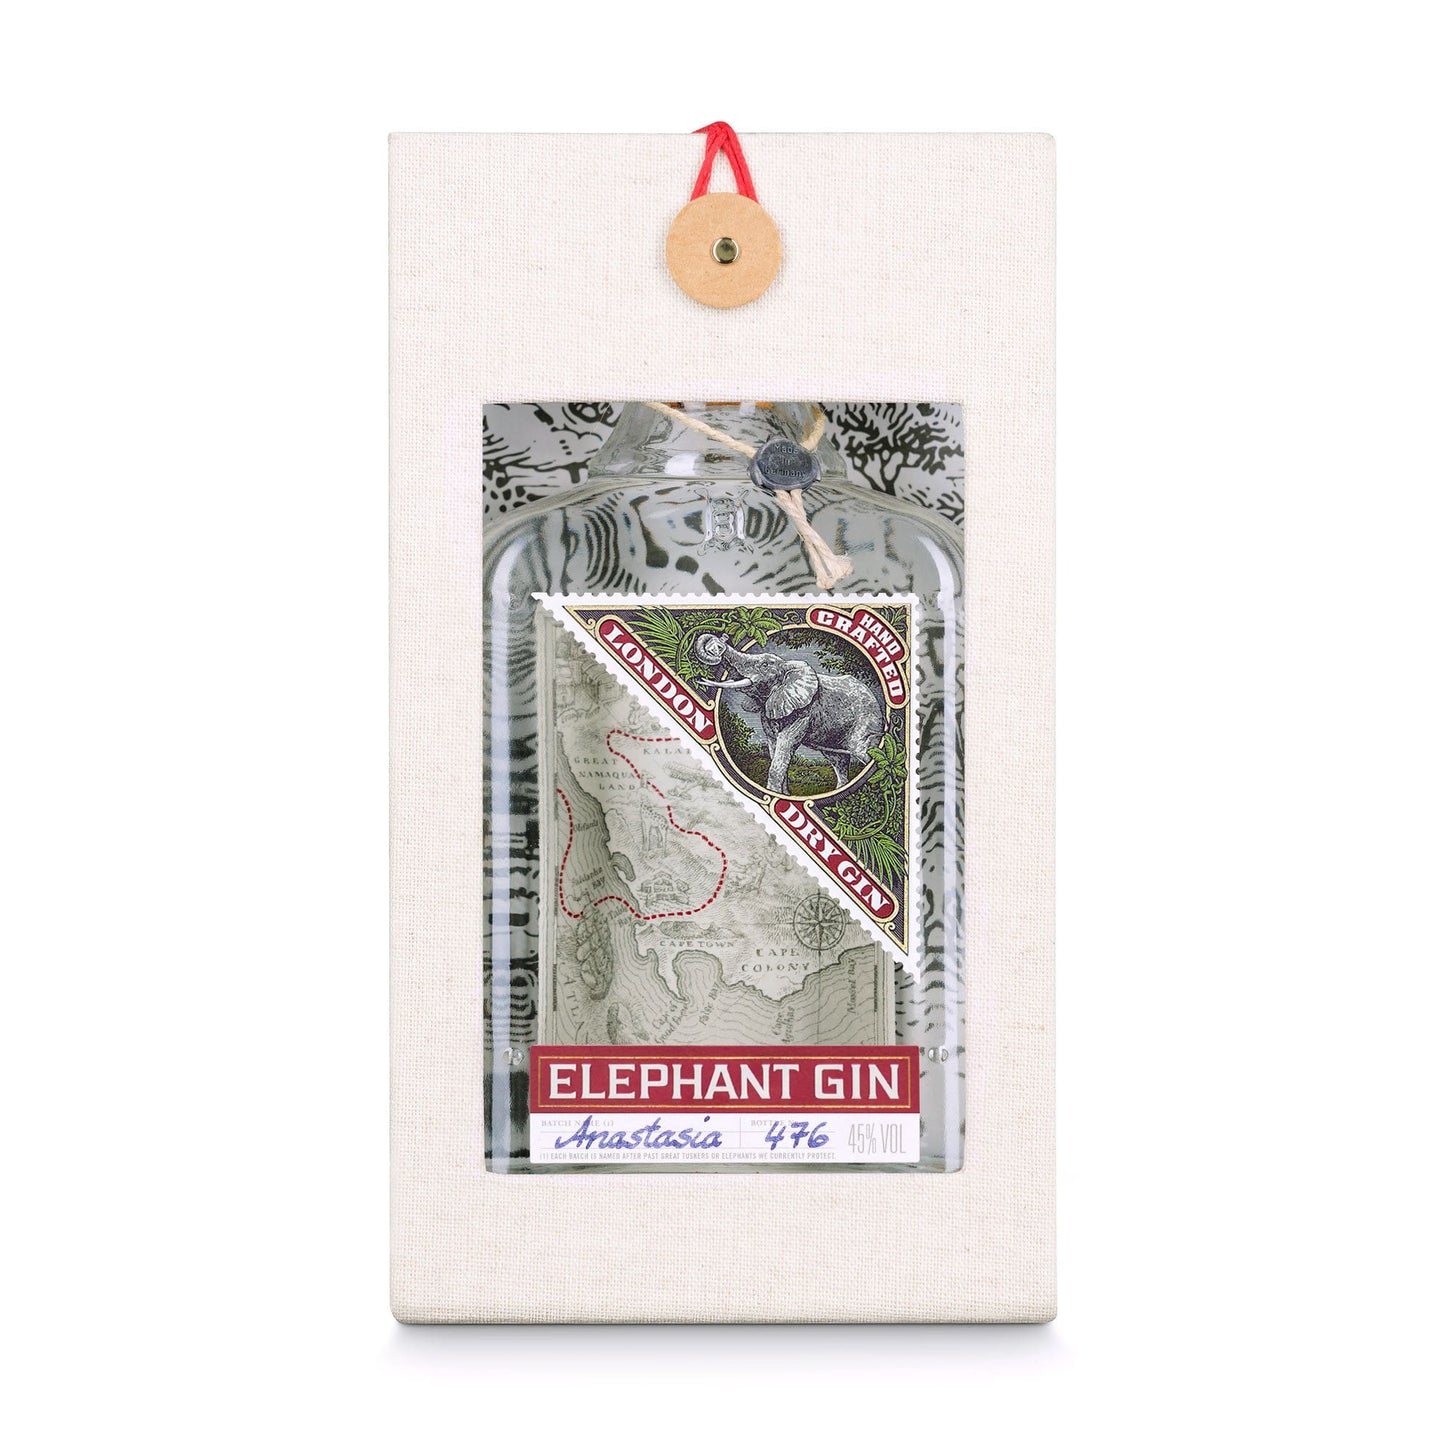 Personalisierbarer Elephant London Dry Gin in Leinengeschenkbox